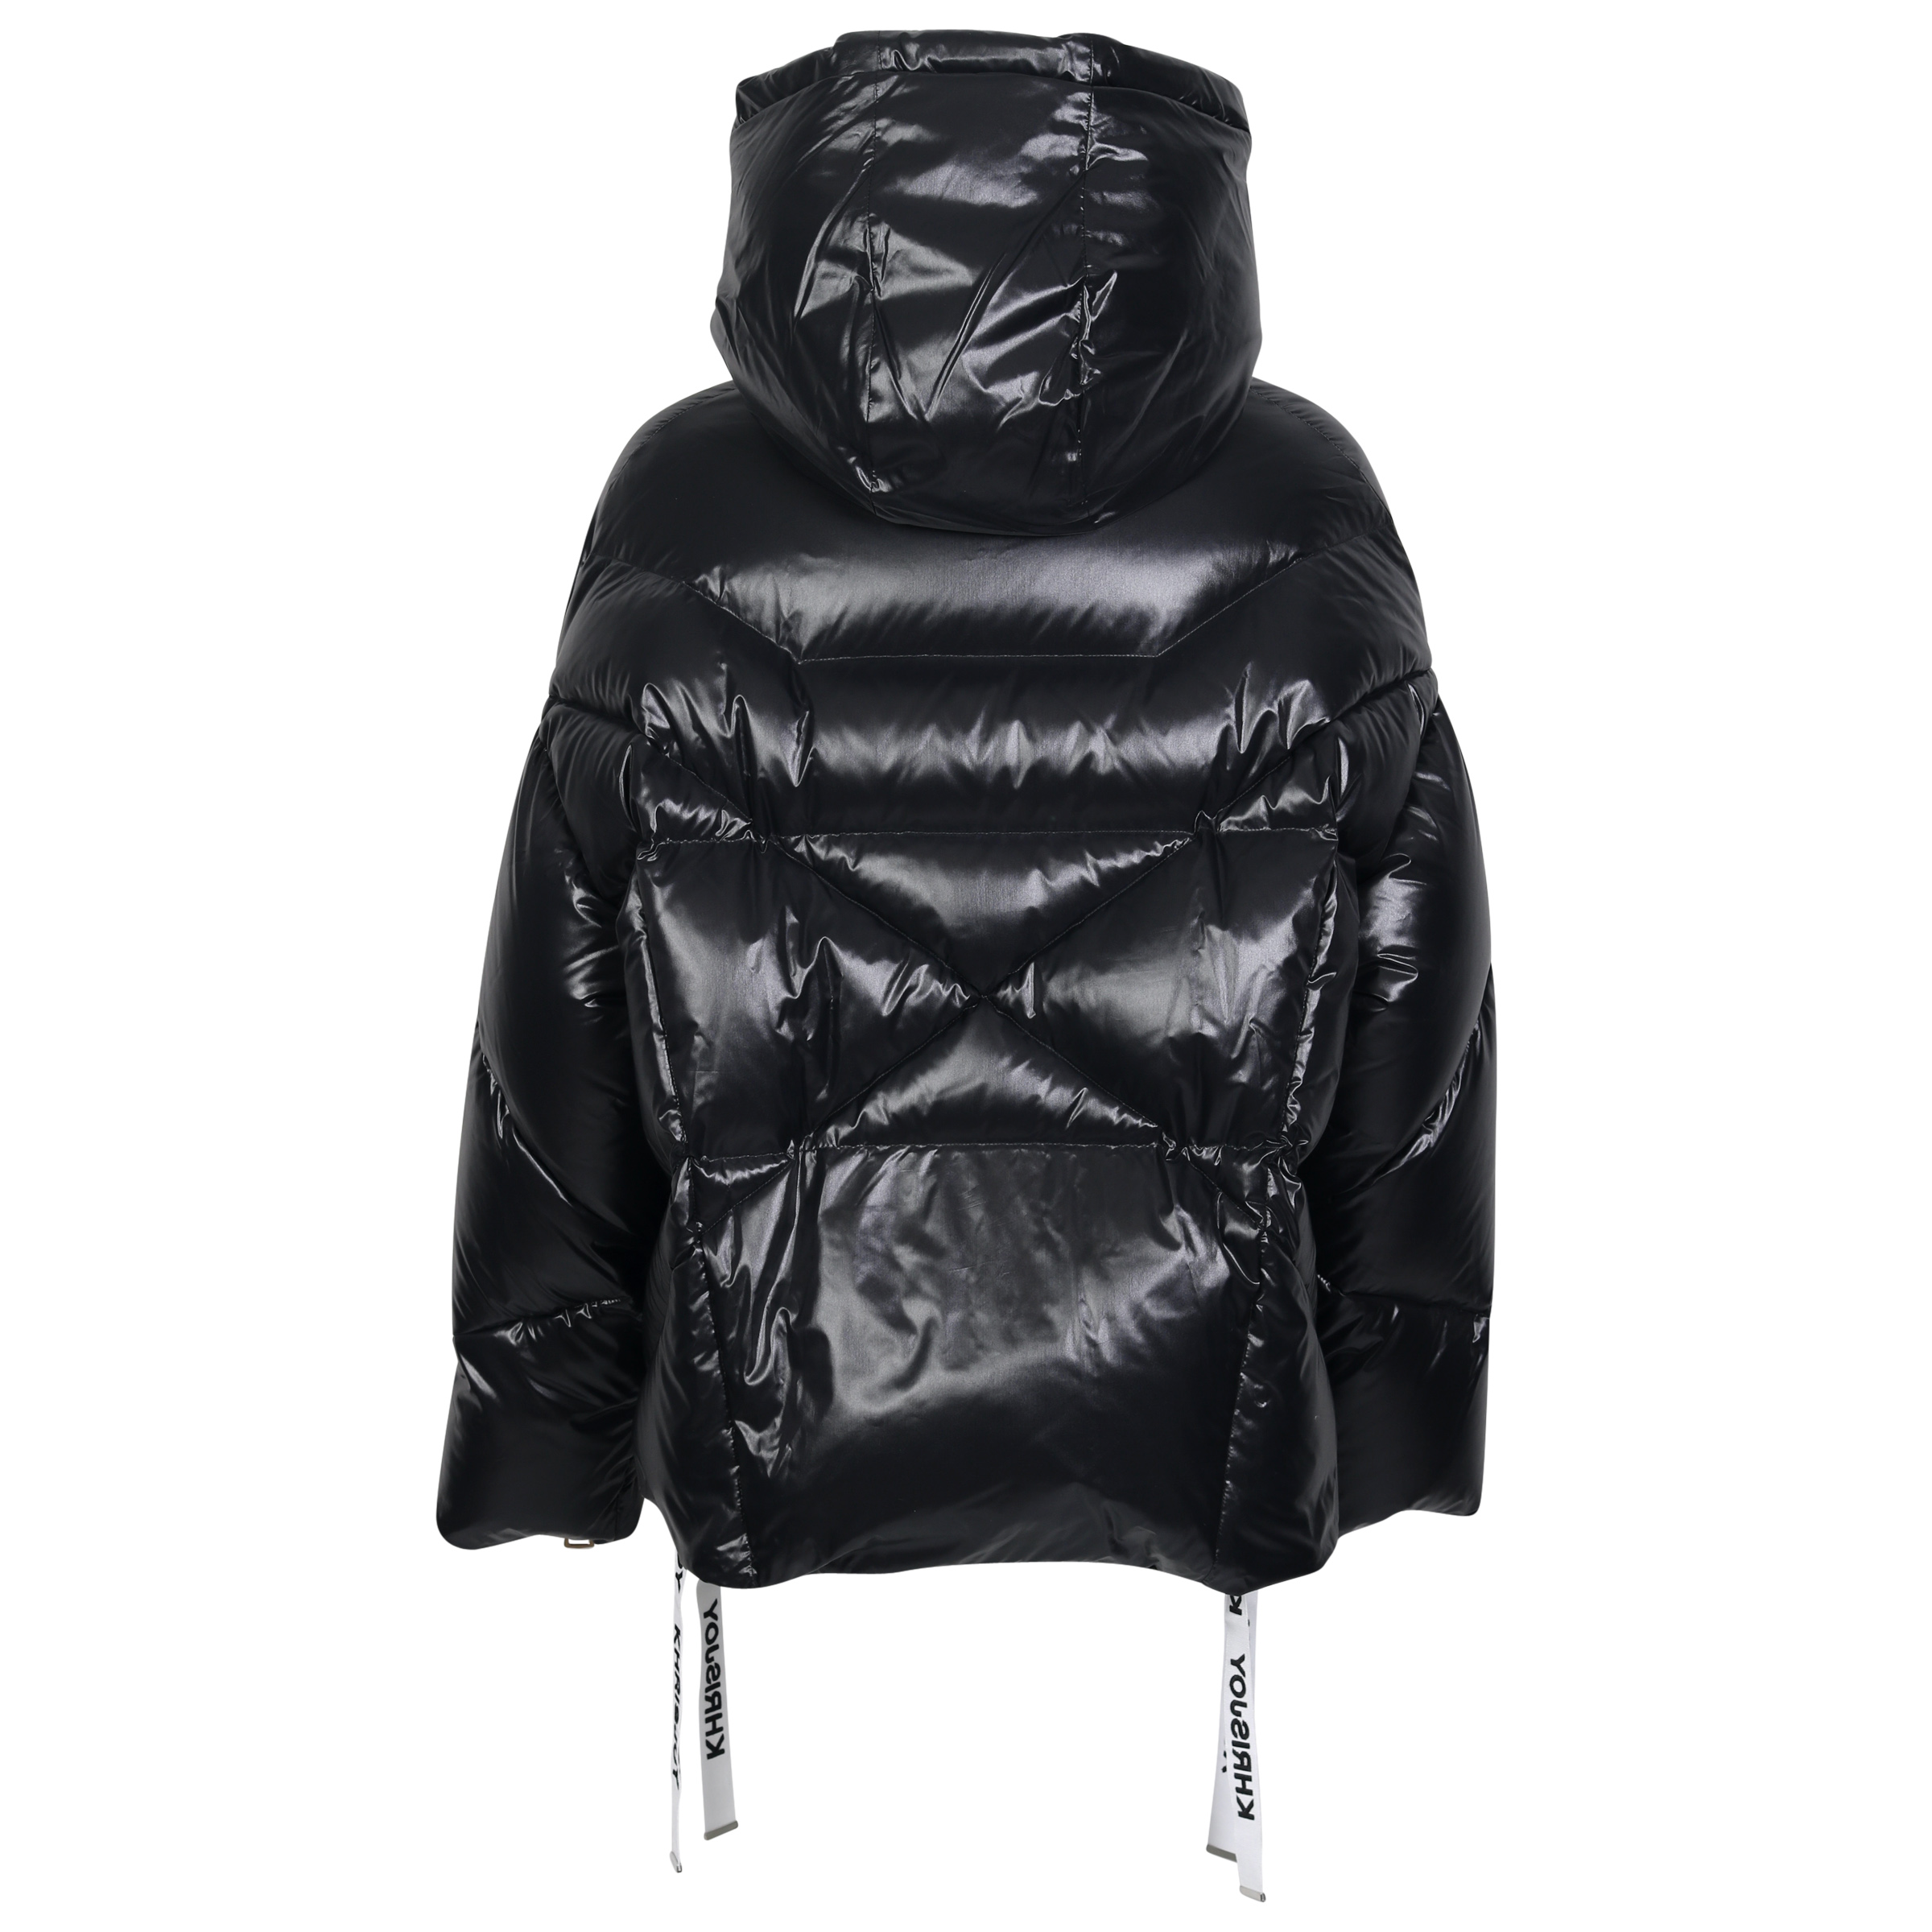 Khrisjoy Iconic Puffer Jacket in Shiny Black